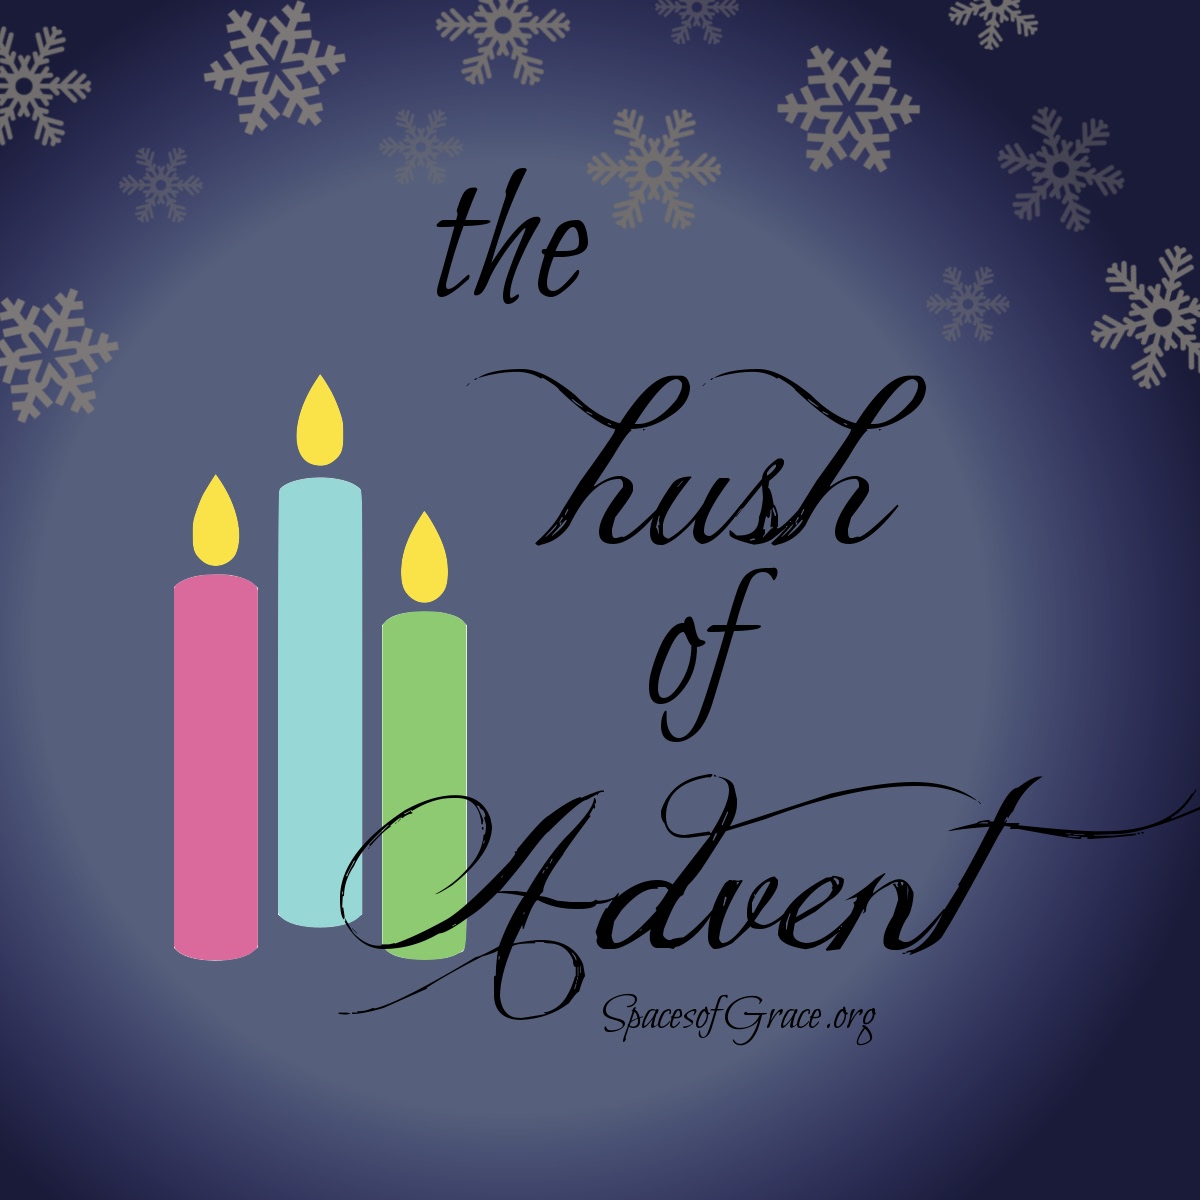 Hush of Advent